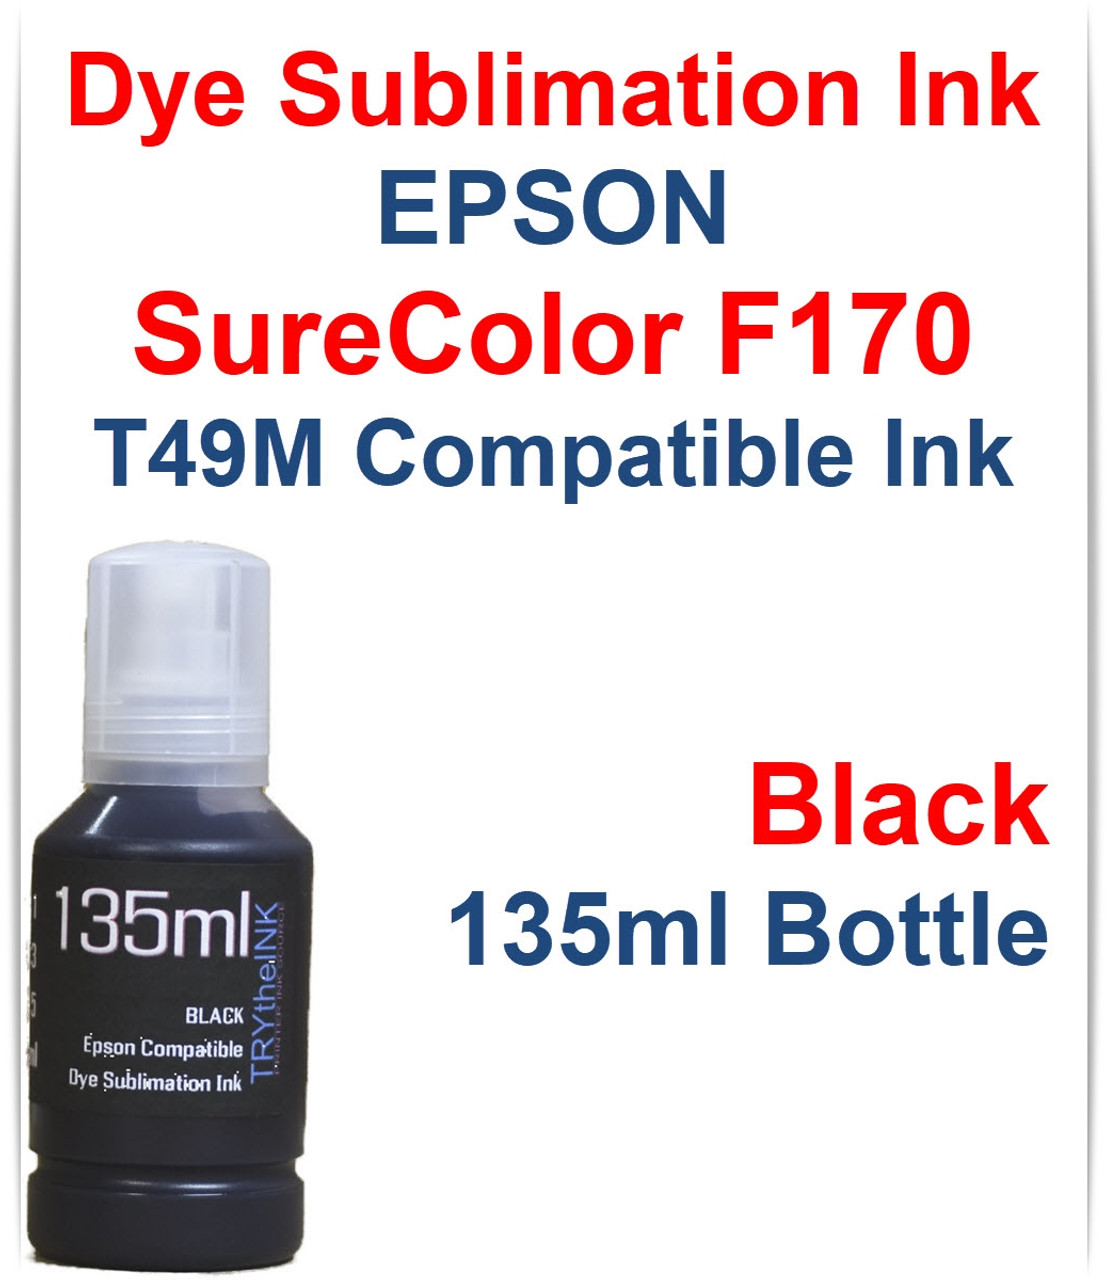 Black 135ml Dye Sublimation Ink for EPSON SureColor F170 printer